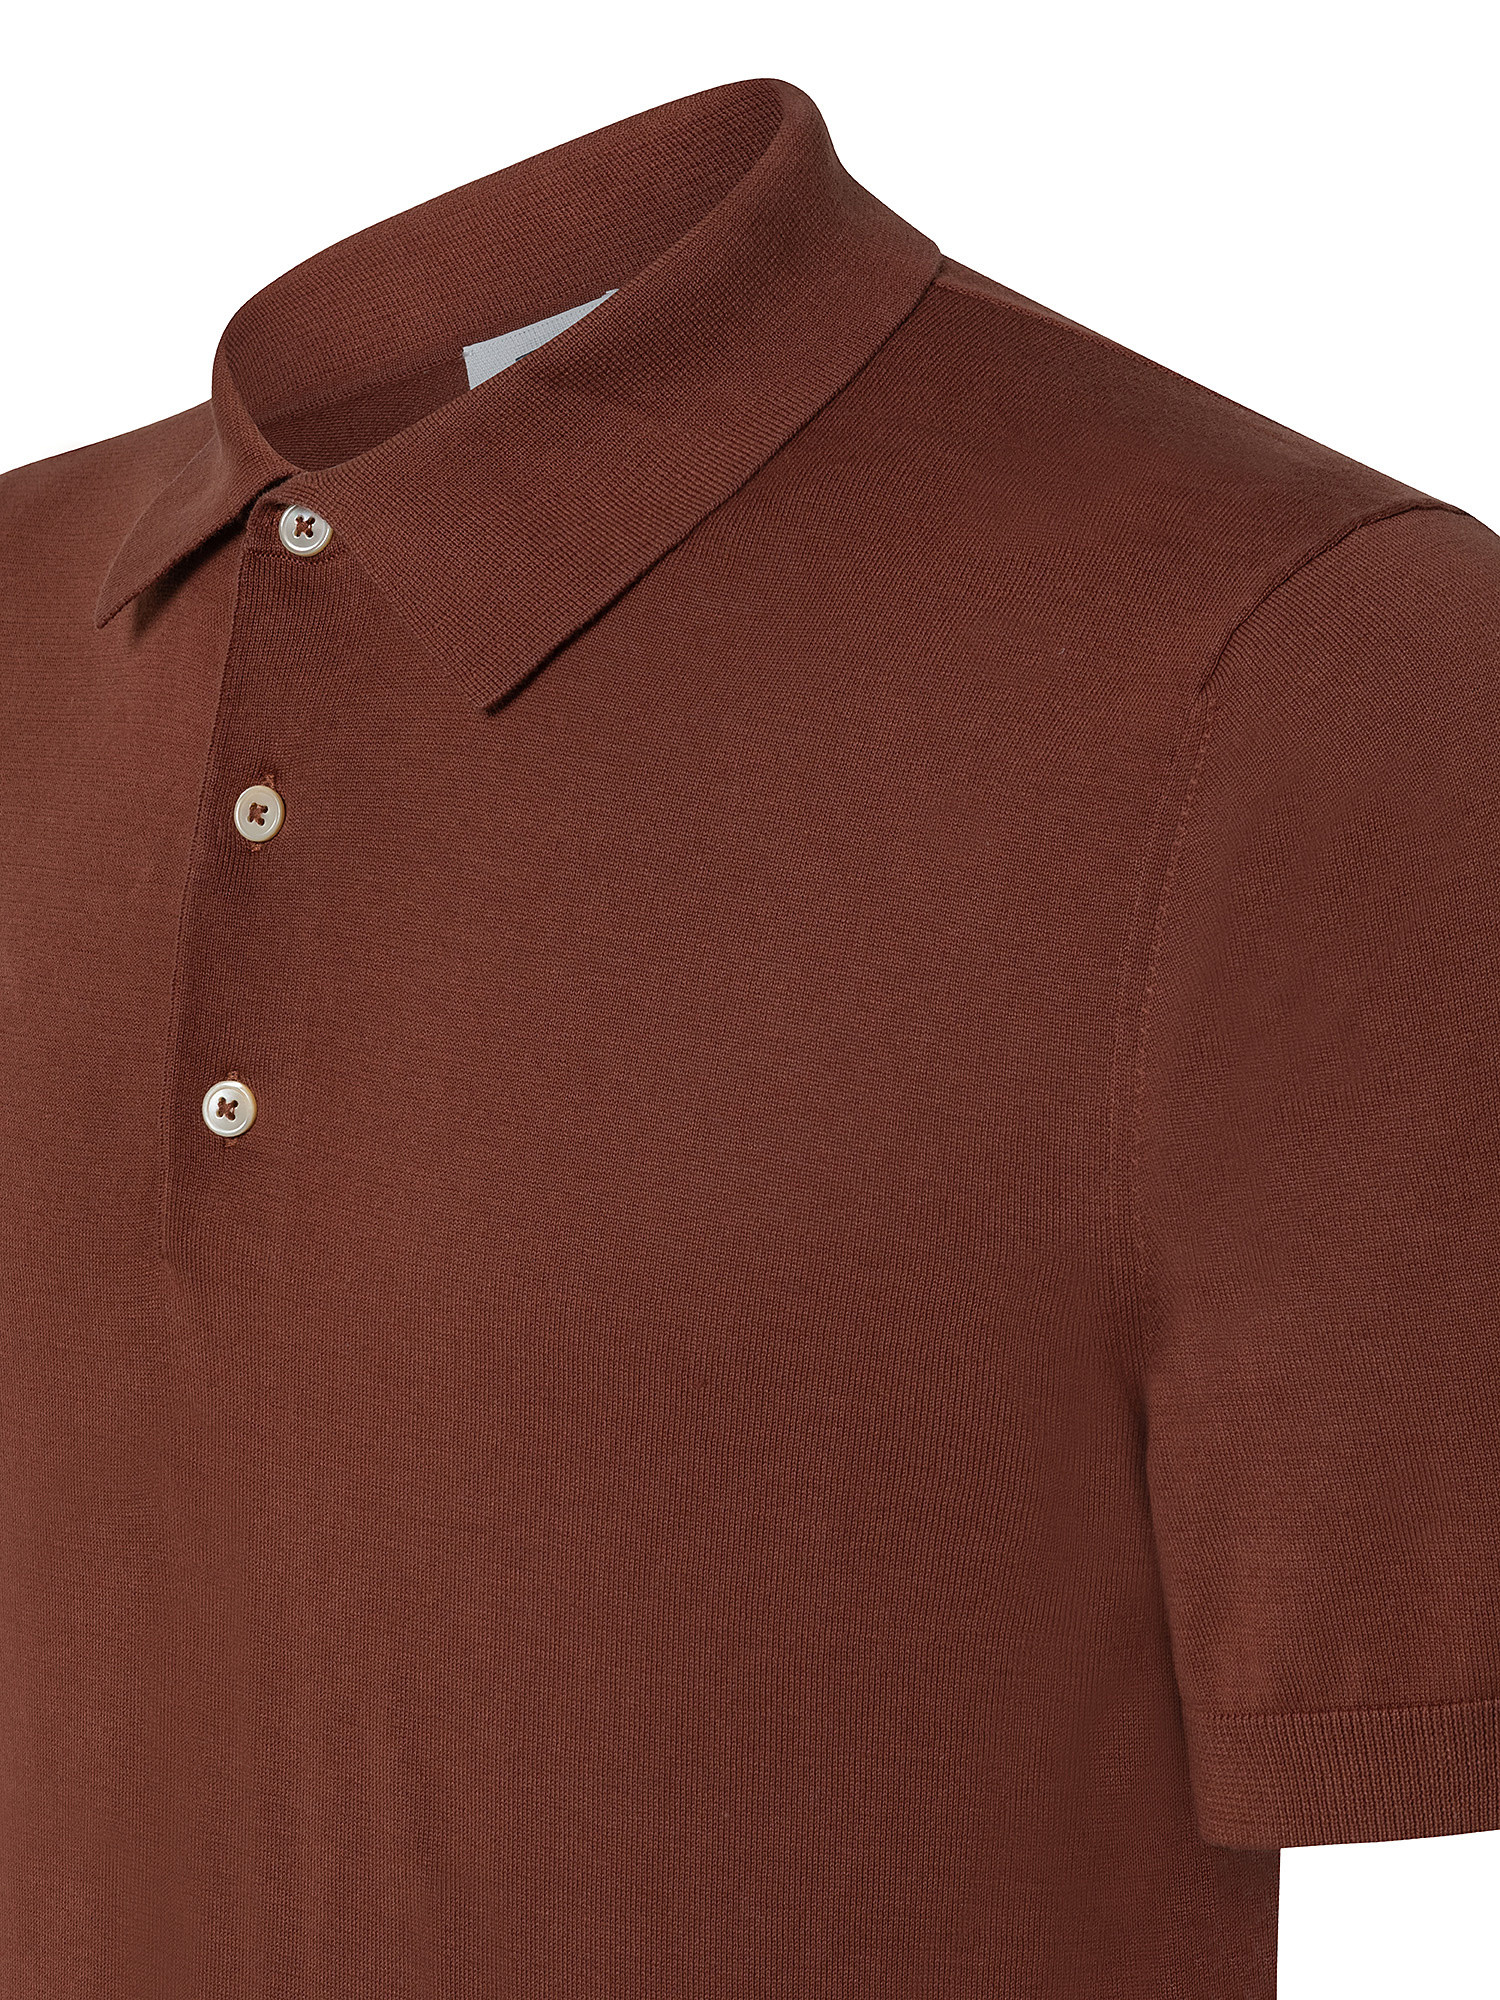 Cotton knit polo shirt, Hazelnut Brown, large image number 2